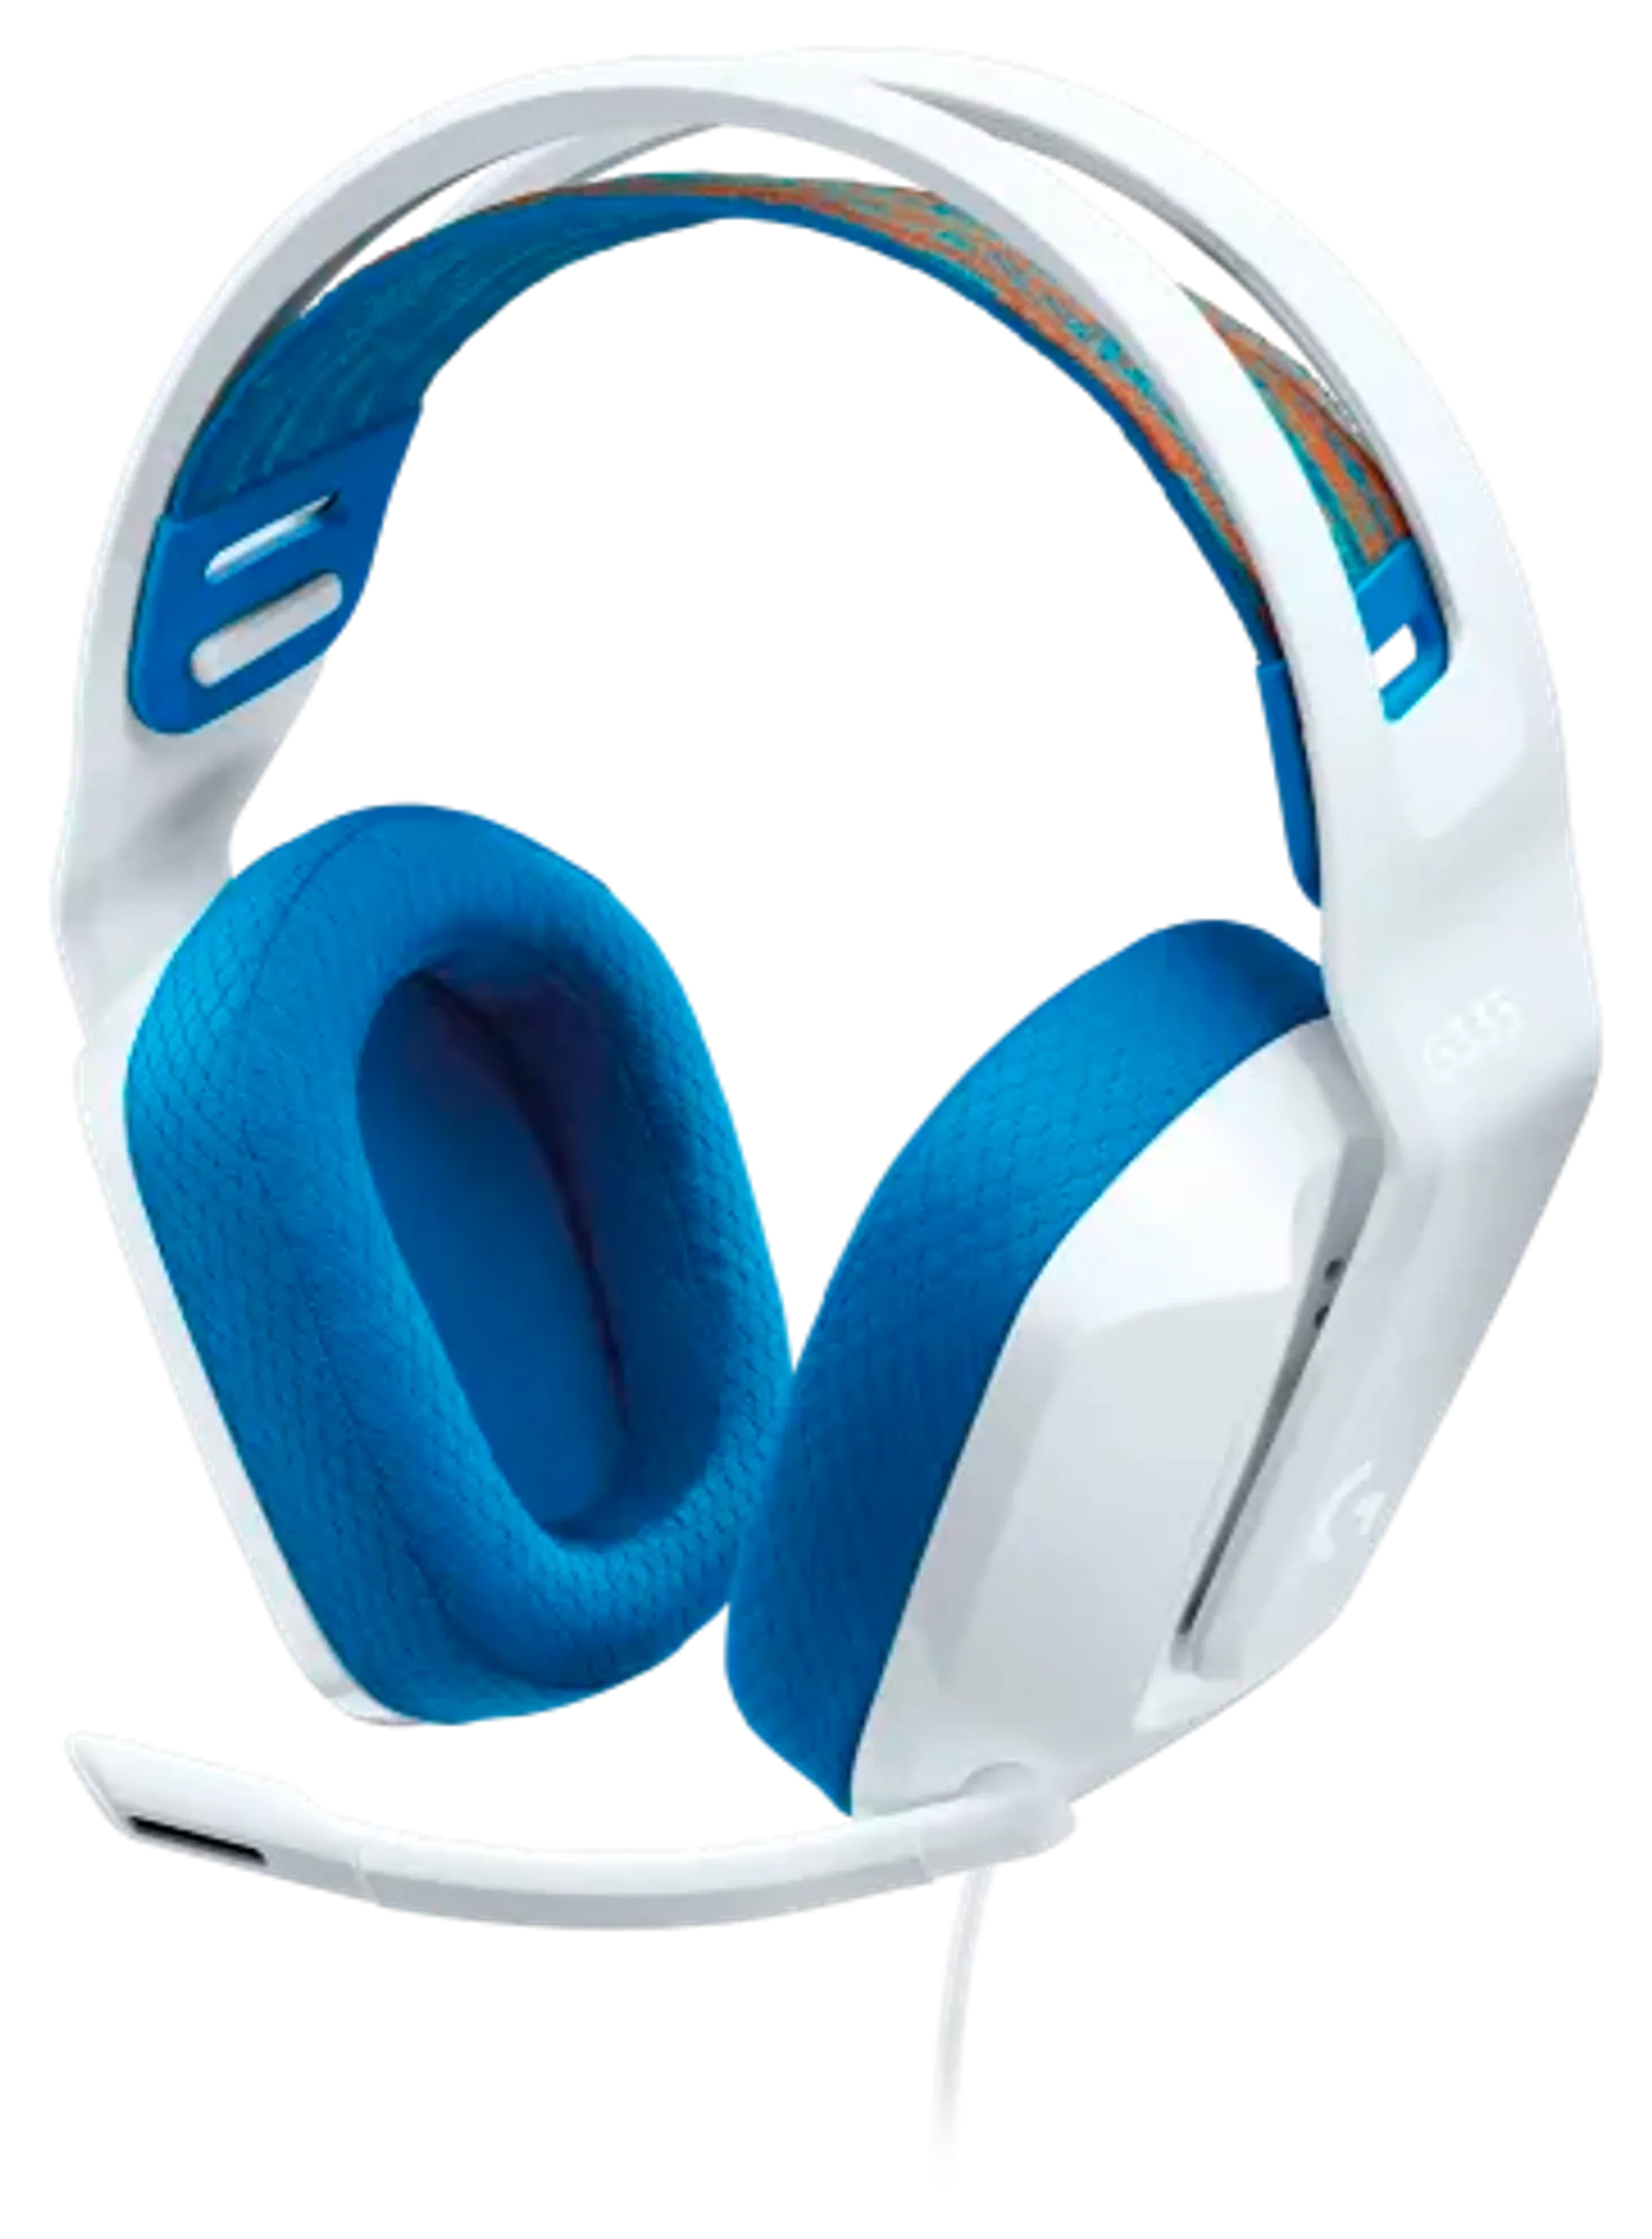 Logitech G335 Wired Gaming Headset - valkoinen - 1